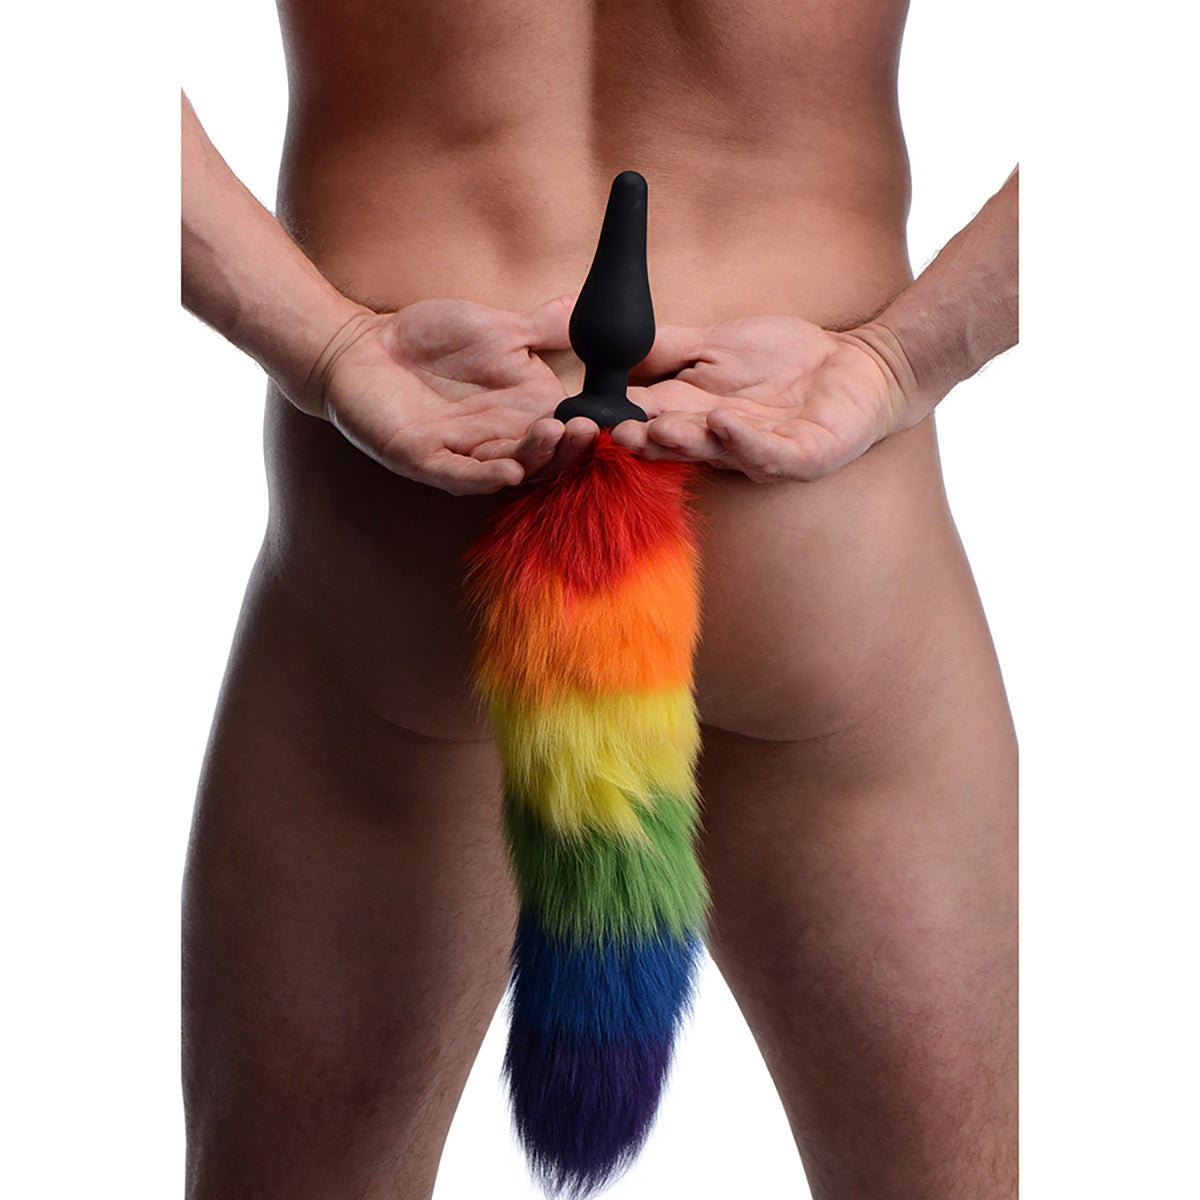 Tailz Rainbow Tail Silicone Butt Plug